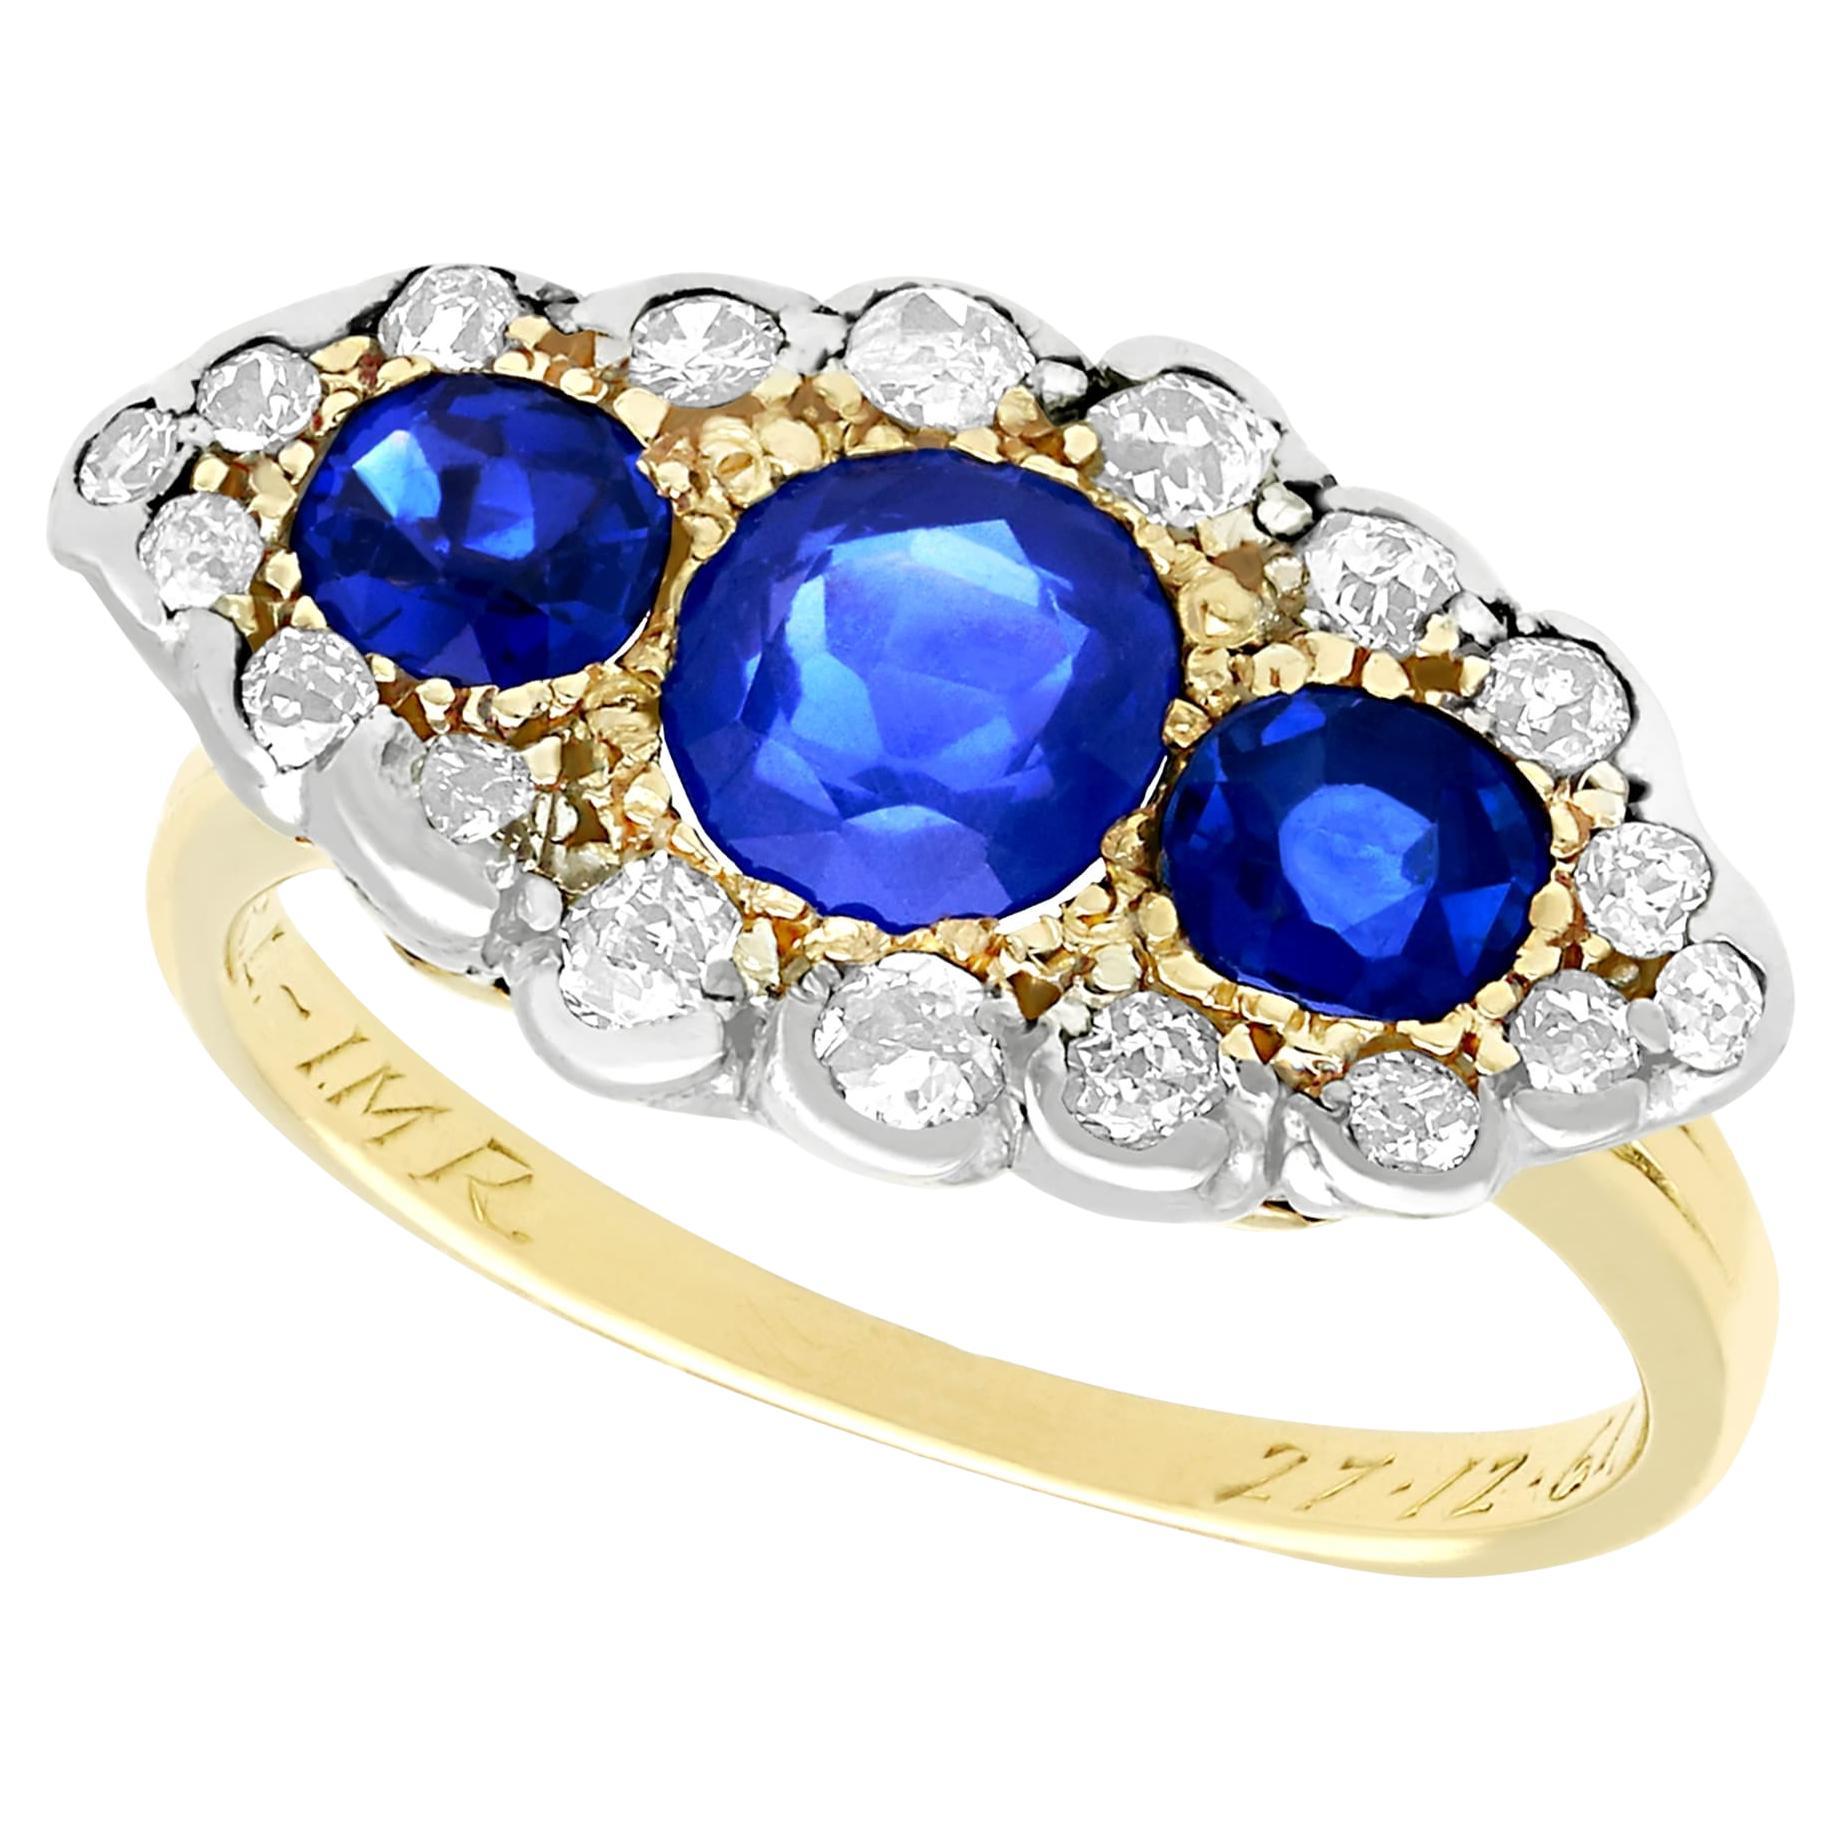 Antique 1.48 Carat Sapphire 1.04 Carat Diamond Ring in Yellow Gold